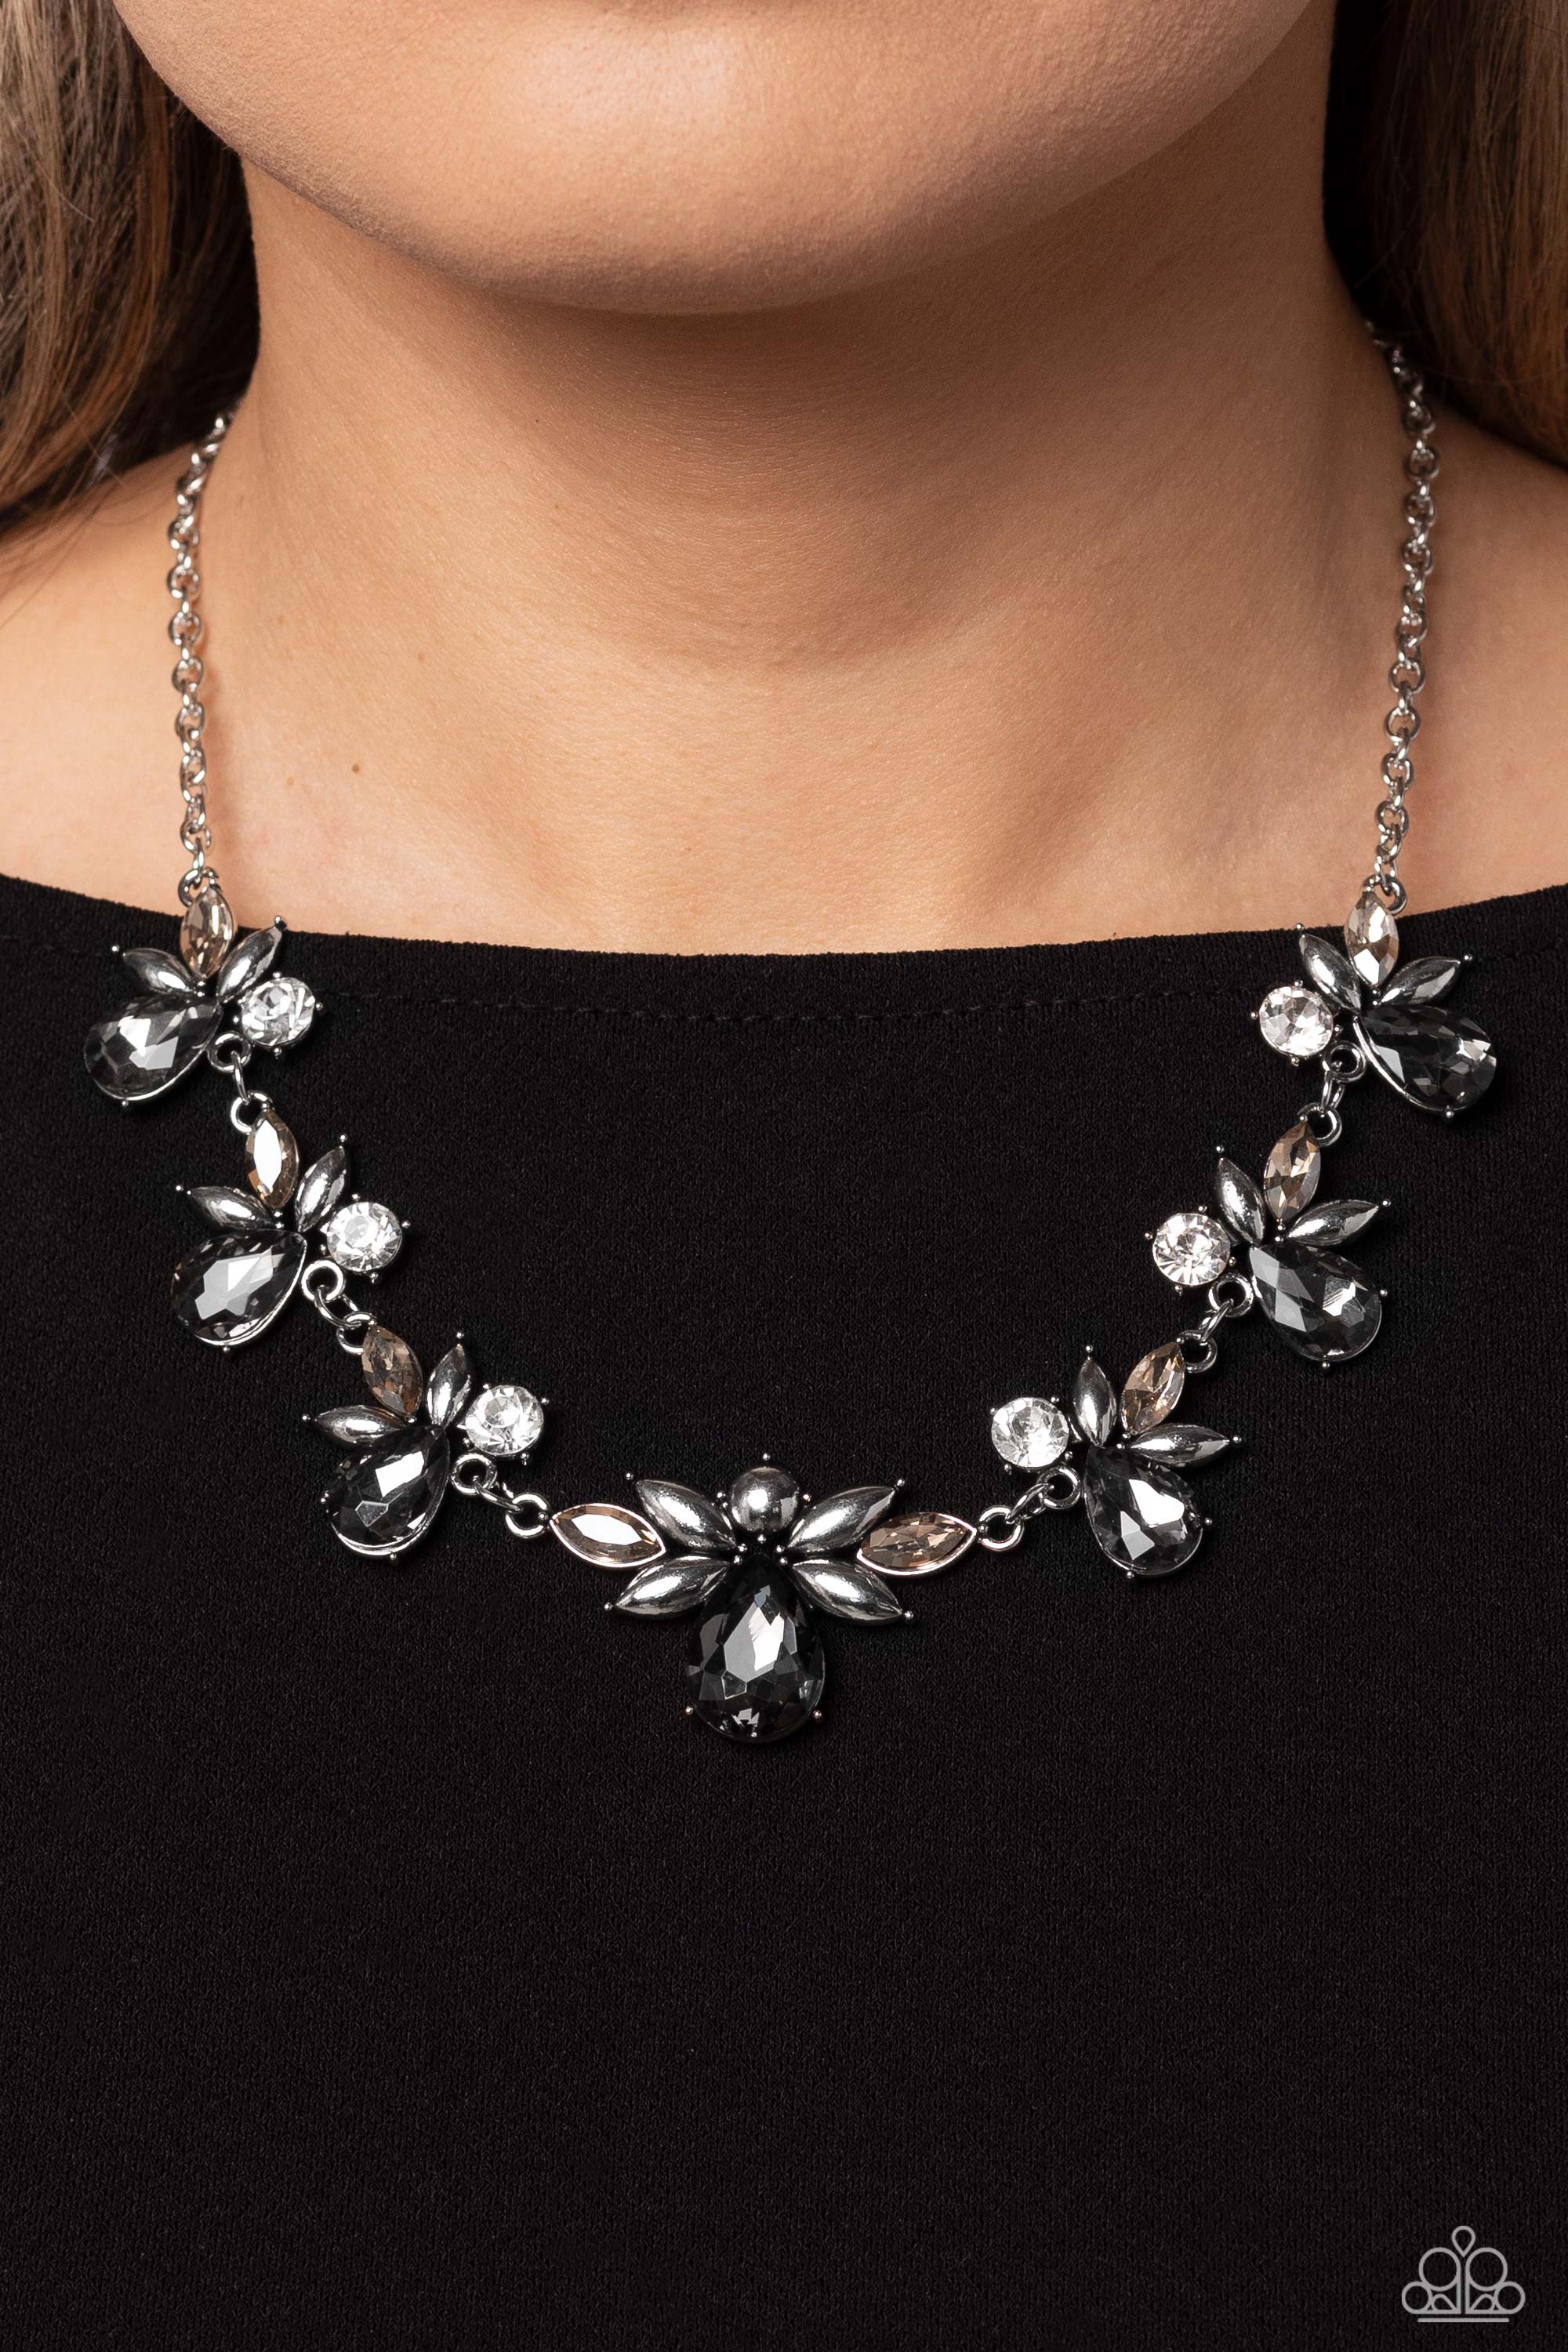 Explosive Effulgence Silver & White Rhinestone Necklace - Paparazzi Accessories- lightbox - CarasShop.com - $5 Jewelry by Cara Jewels